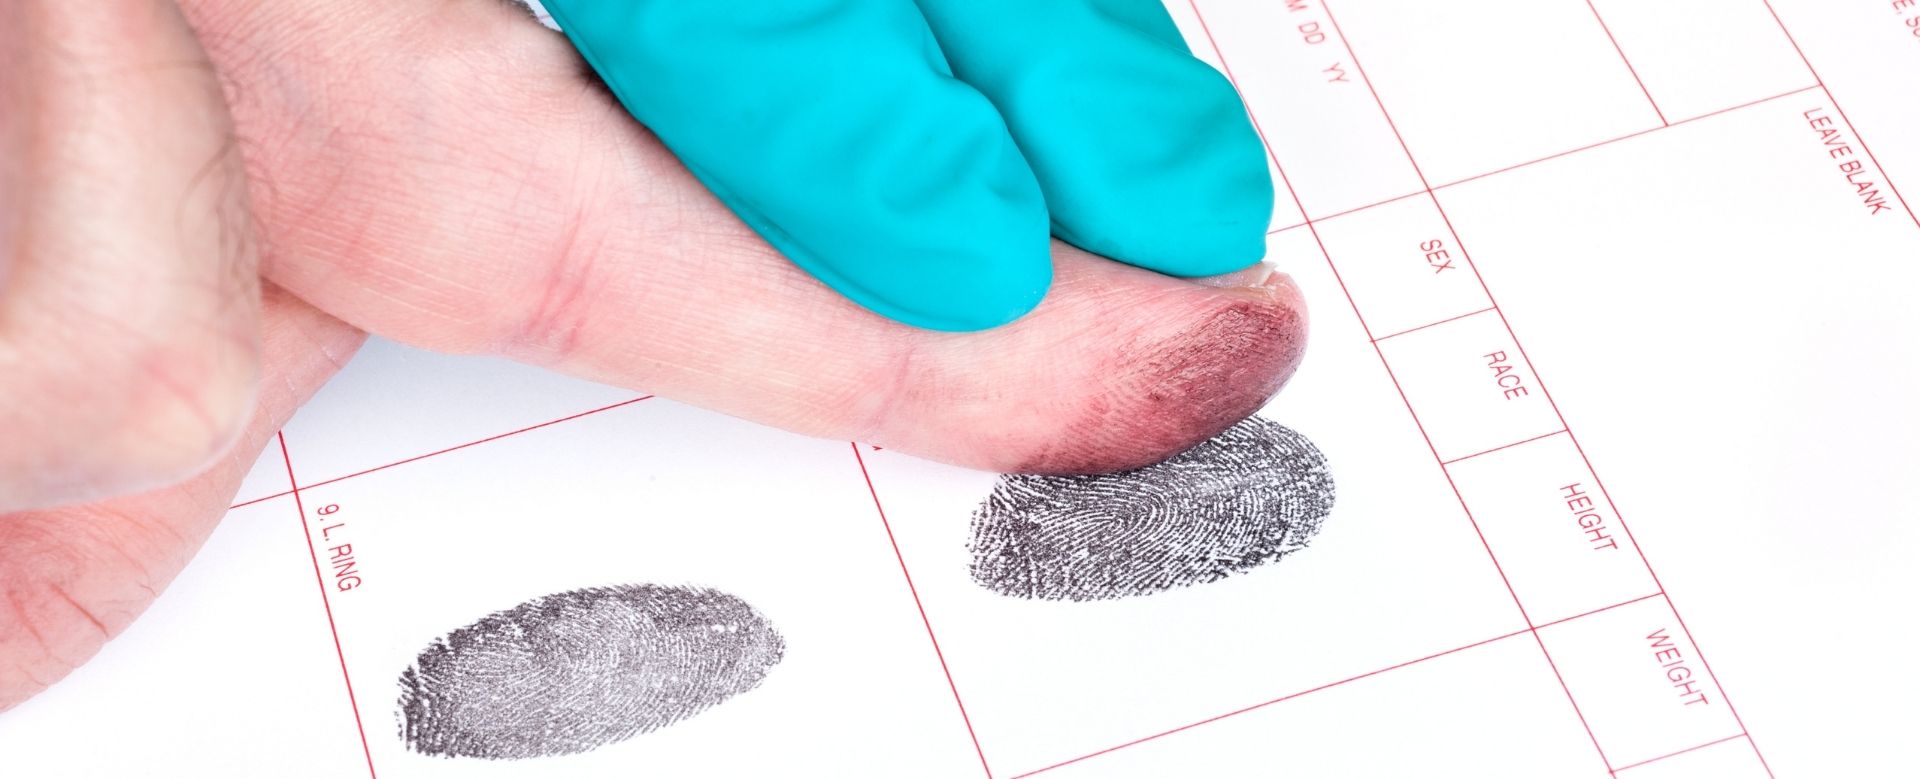 man being finger printed man being finger printed - - alliance fingerprinting lab - man being fingerprinted- alliance fingerprinting lab